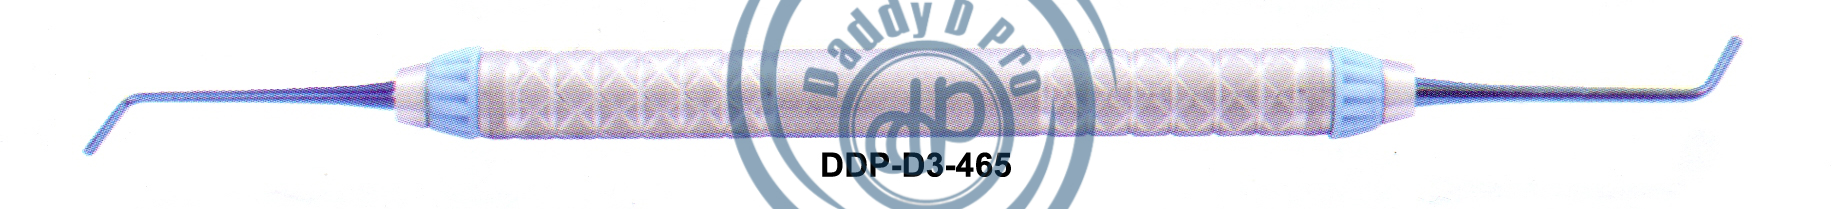 images/DDP-D3-465.png